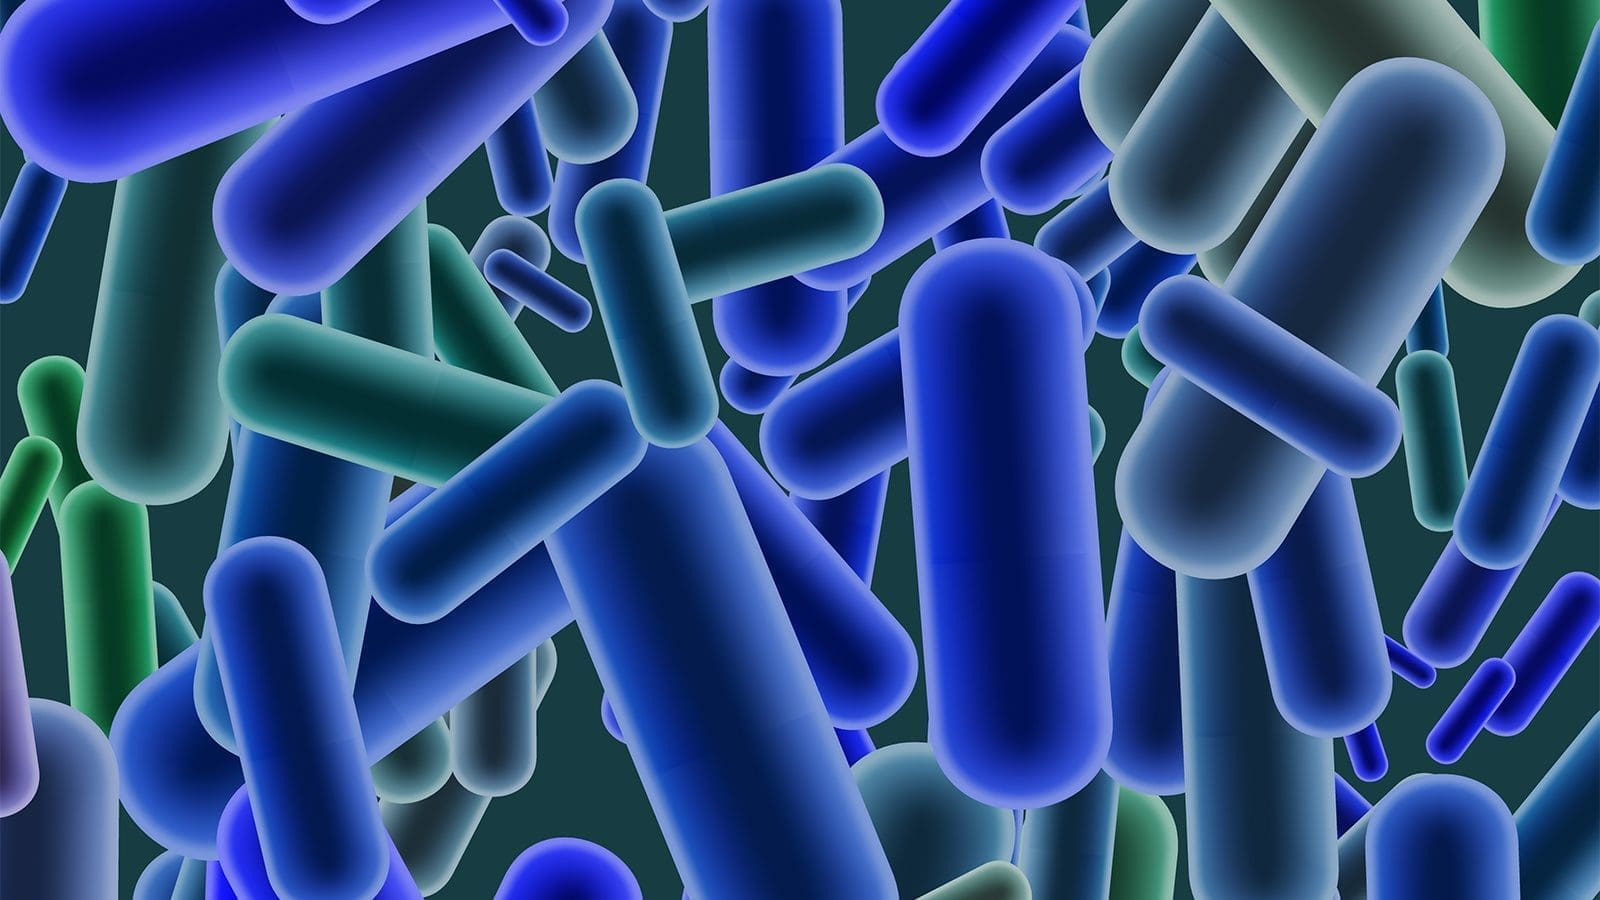 Study shows blue light’s power against Listeria